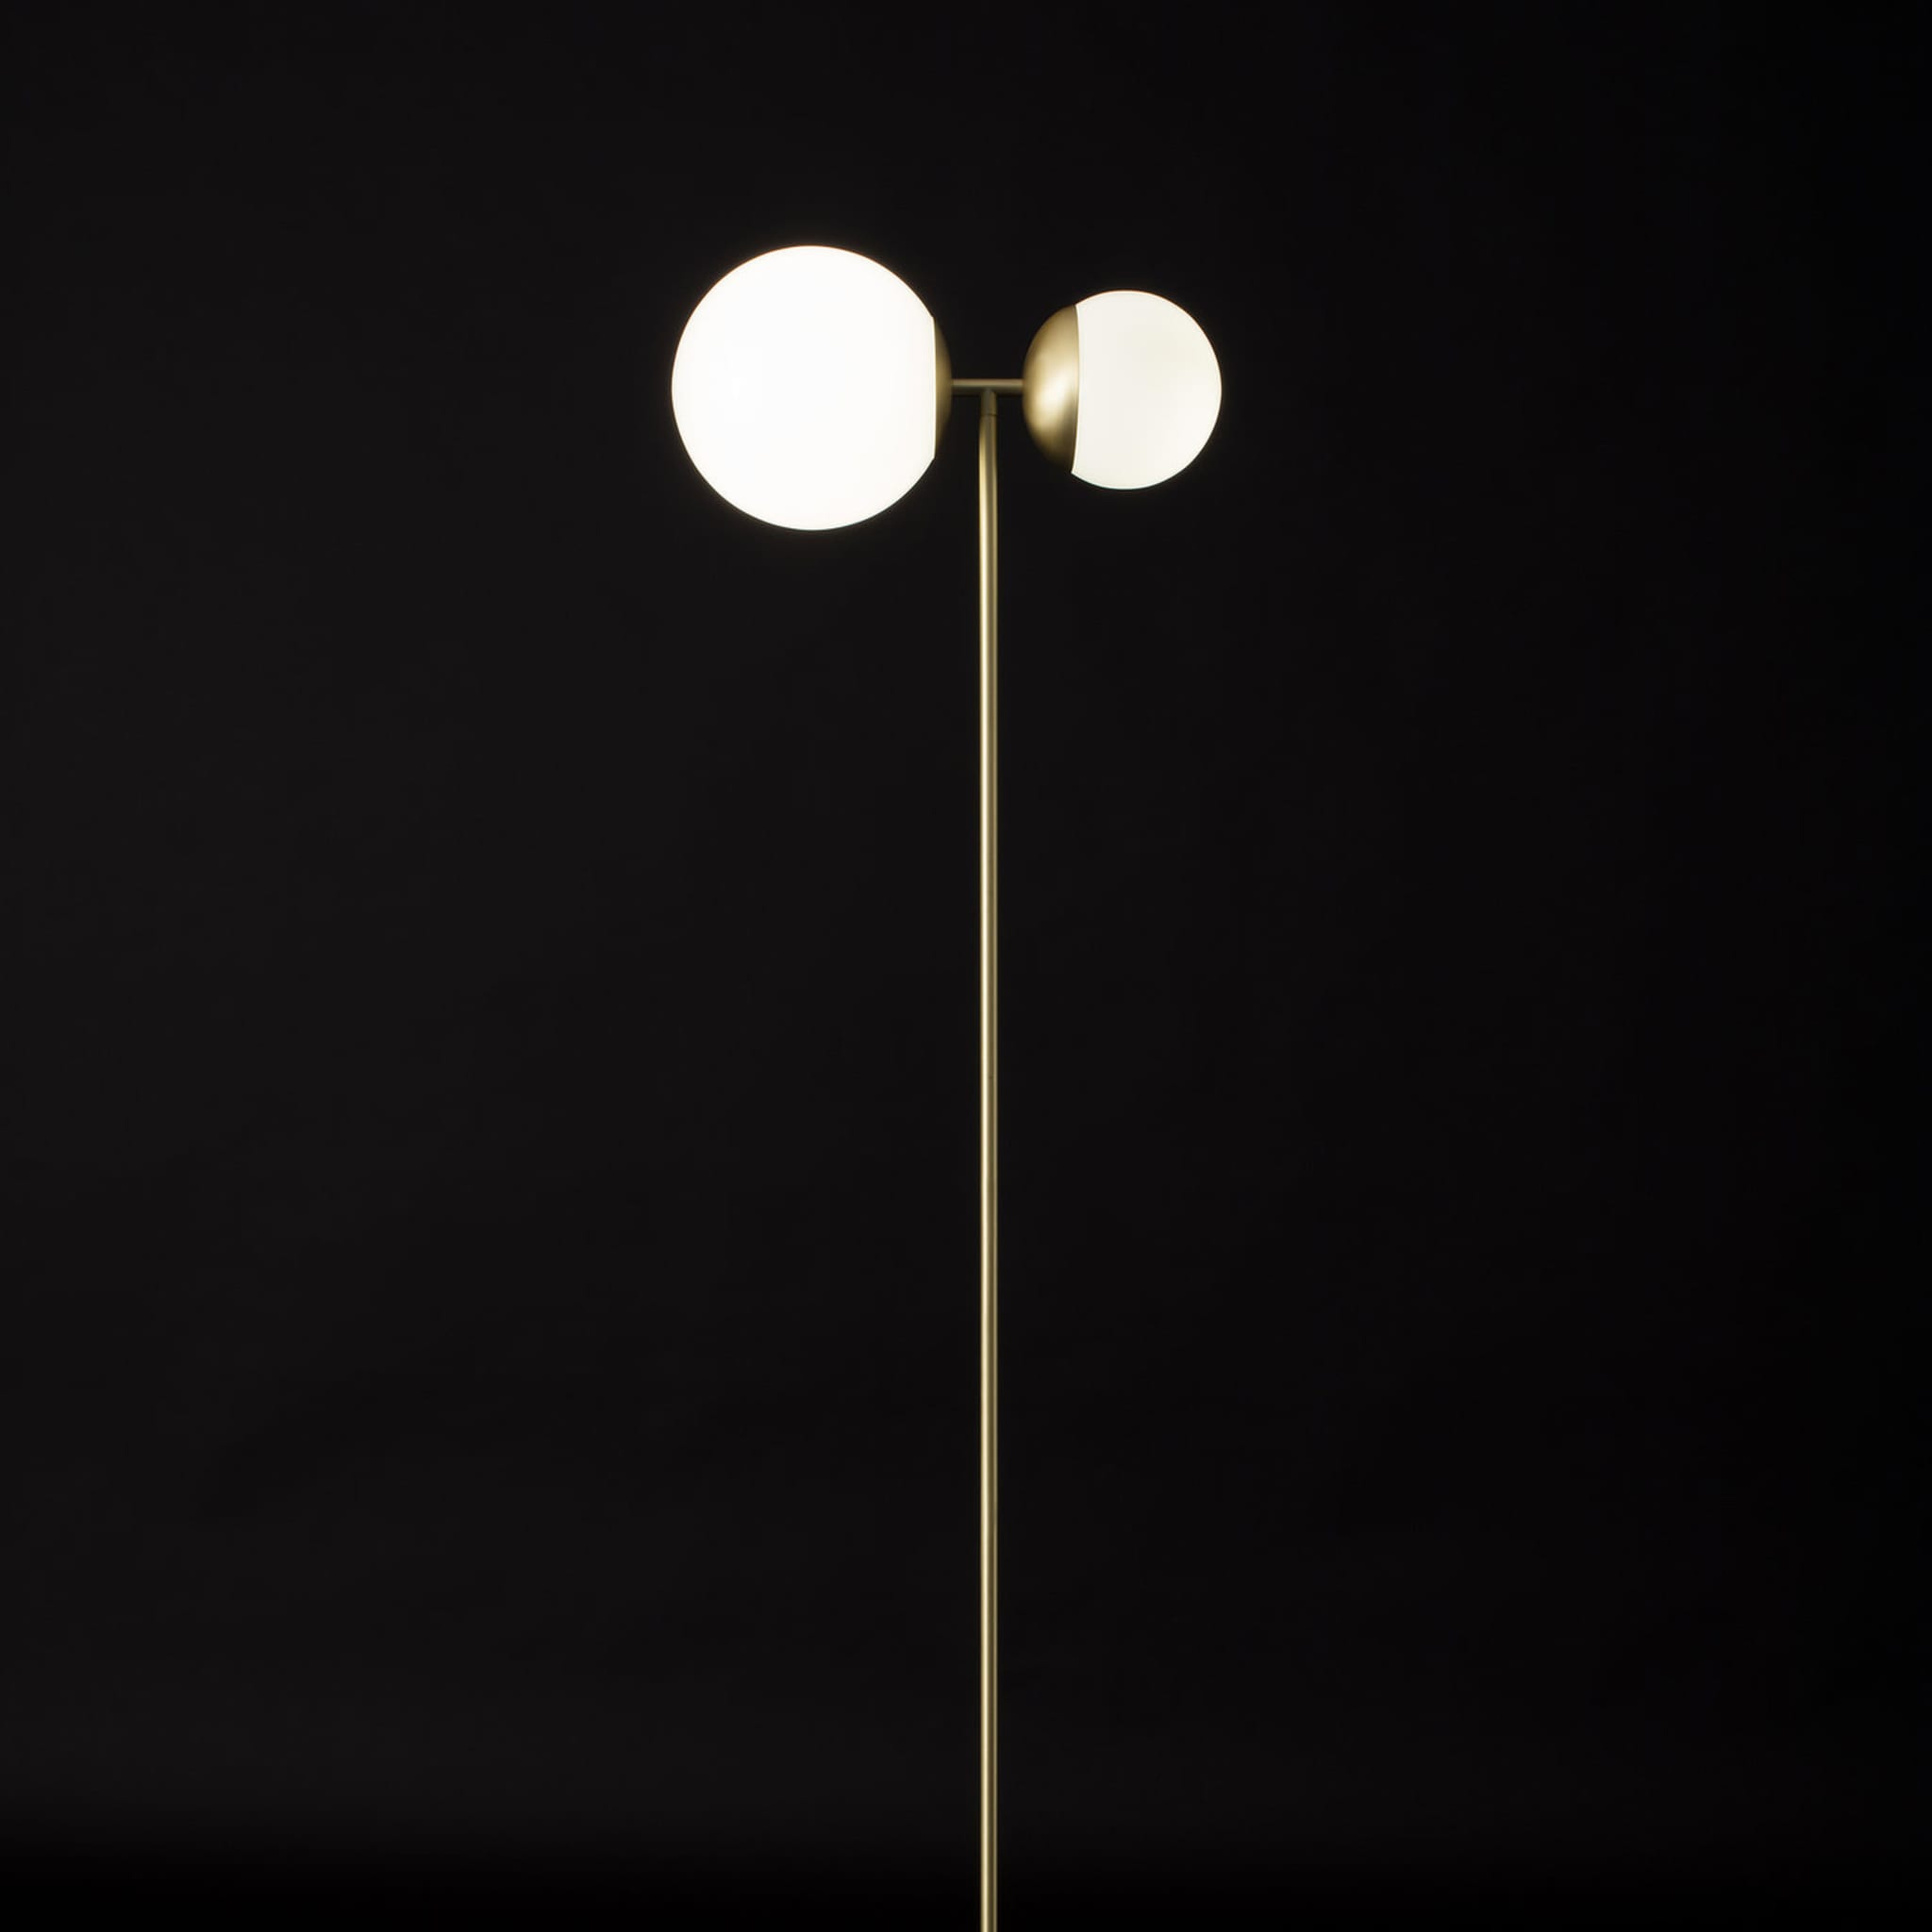 Biba Floor Lamp by Lorenza Bozzoli - Alternative view 2